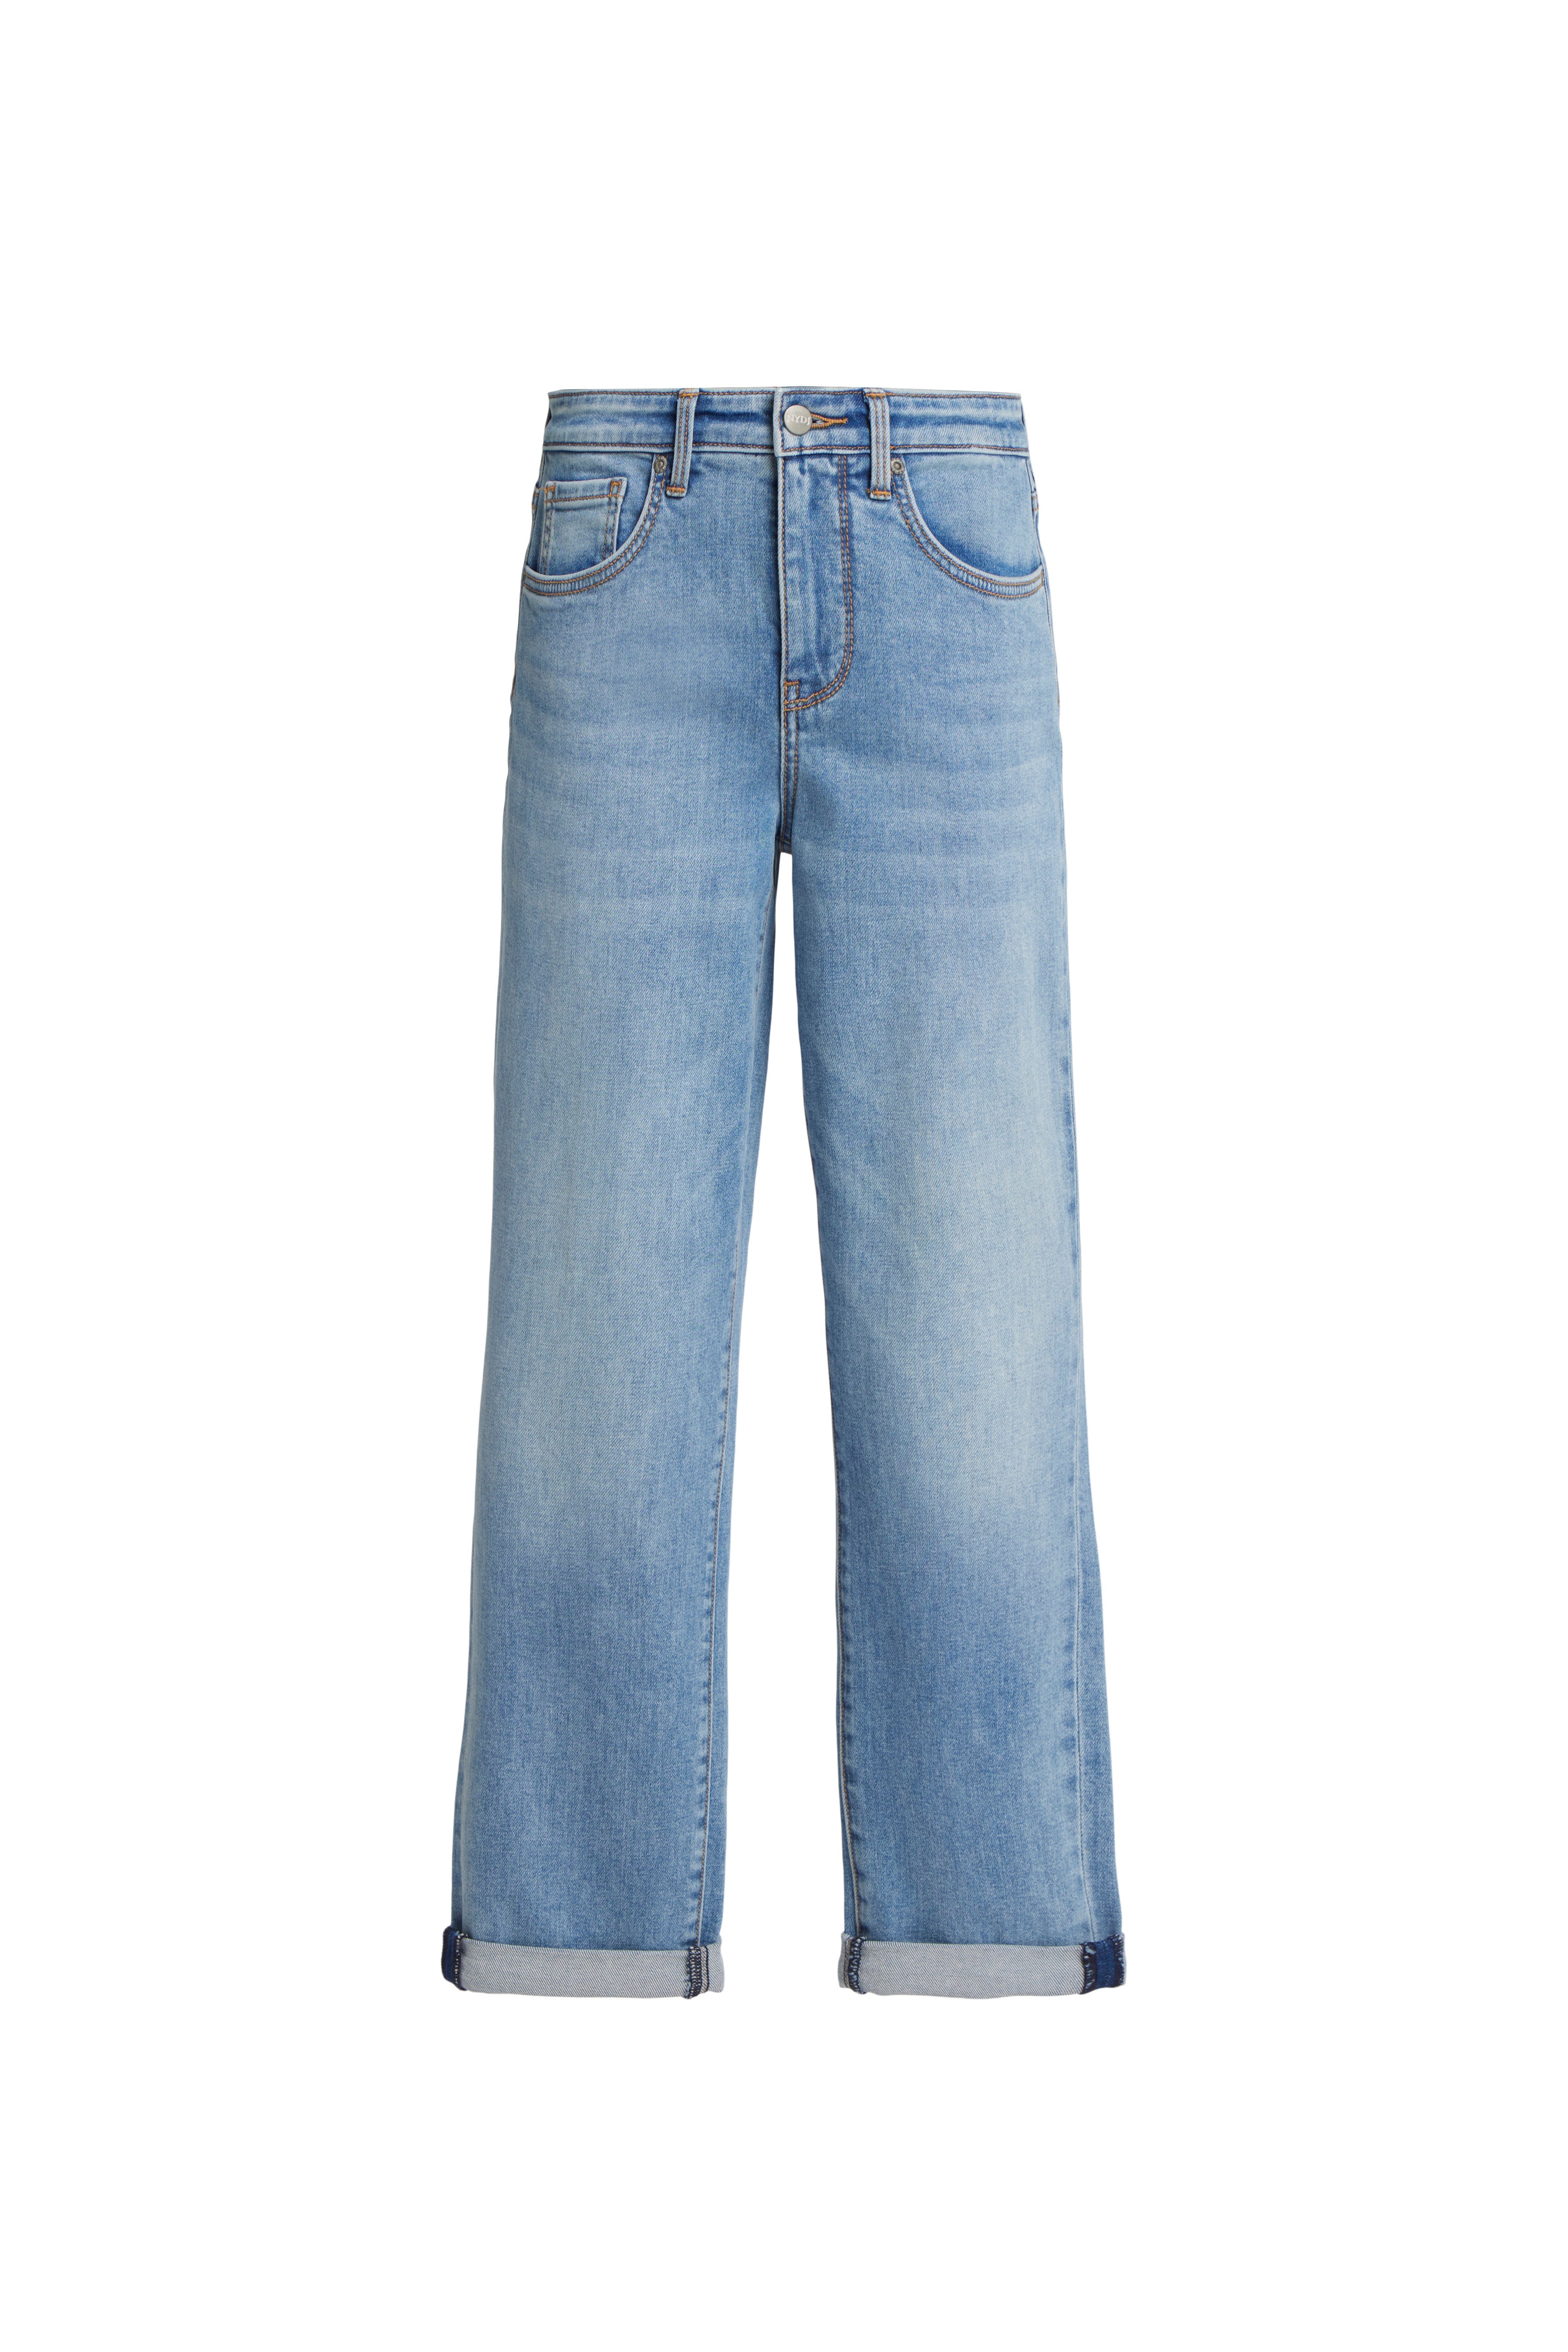 New Distressed Jeans by Rag & Bone for Men : DenimBlog